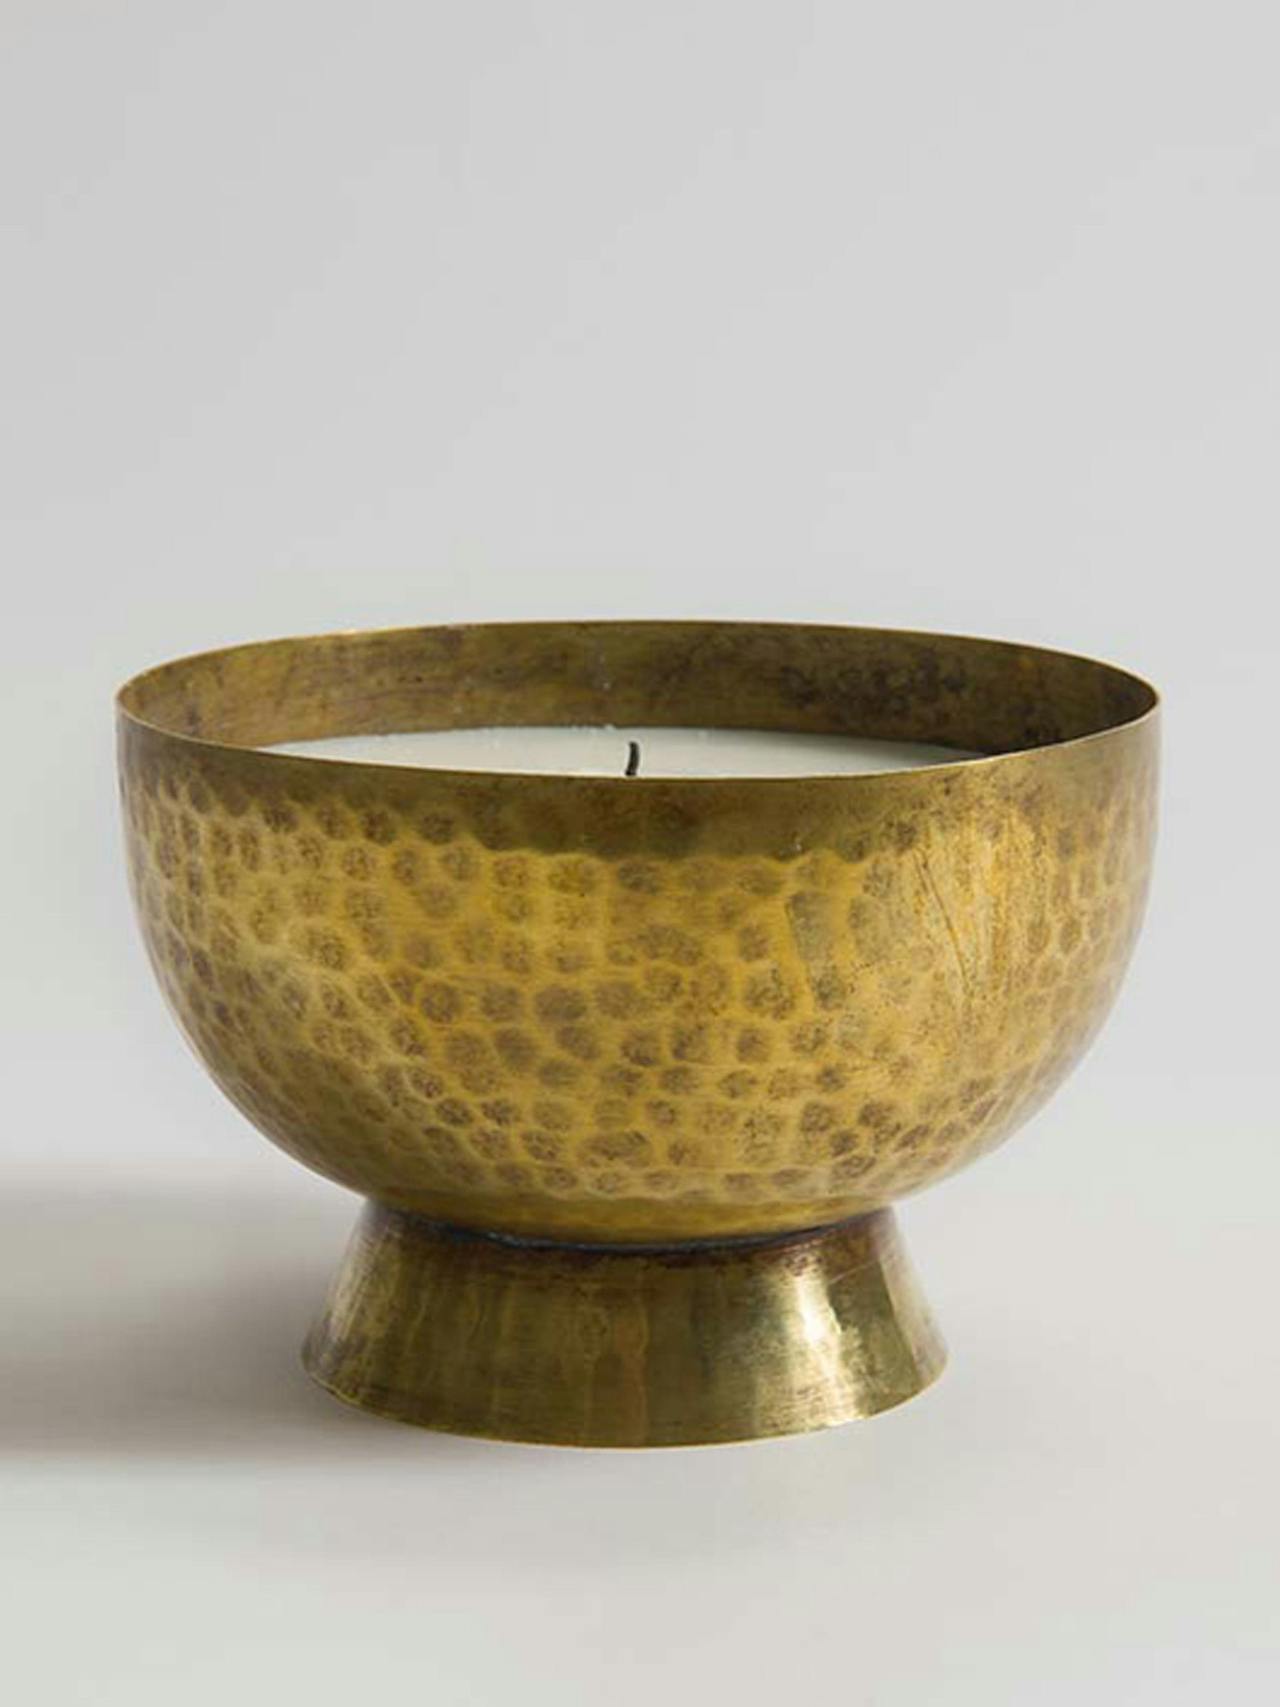 Irrawaddy brass candle bowl